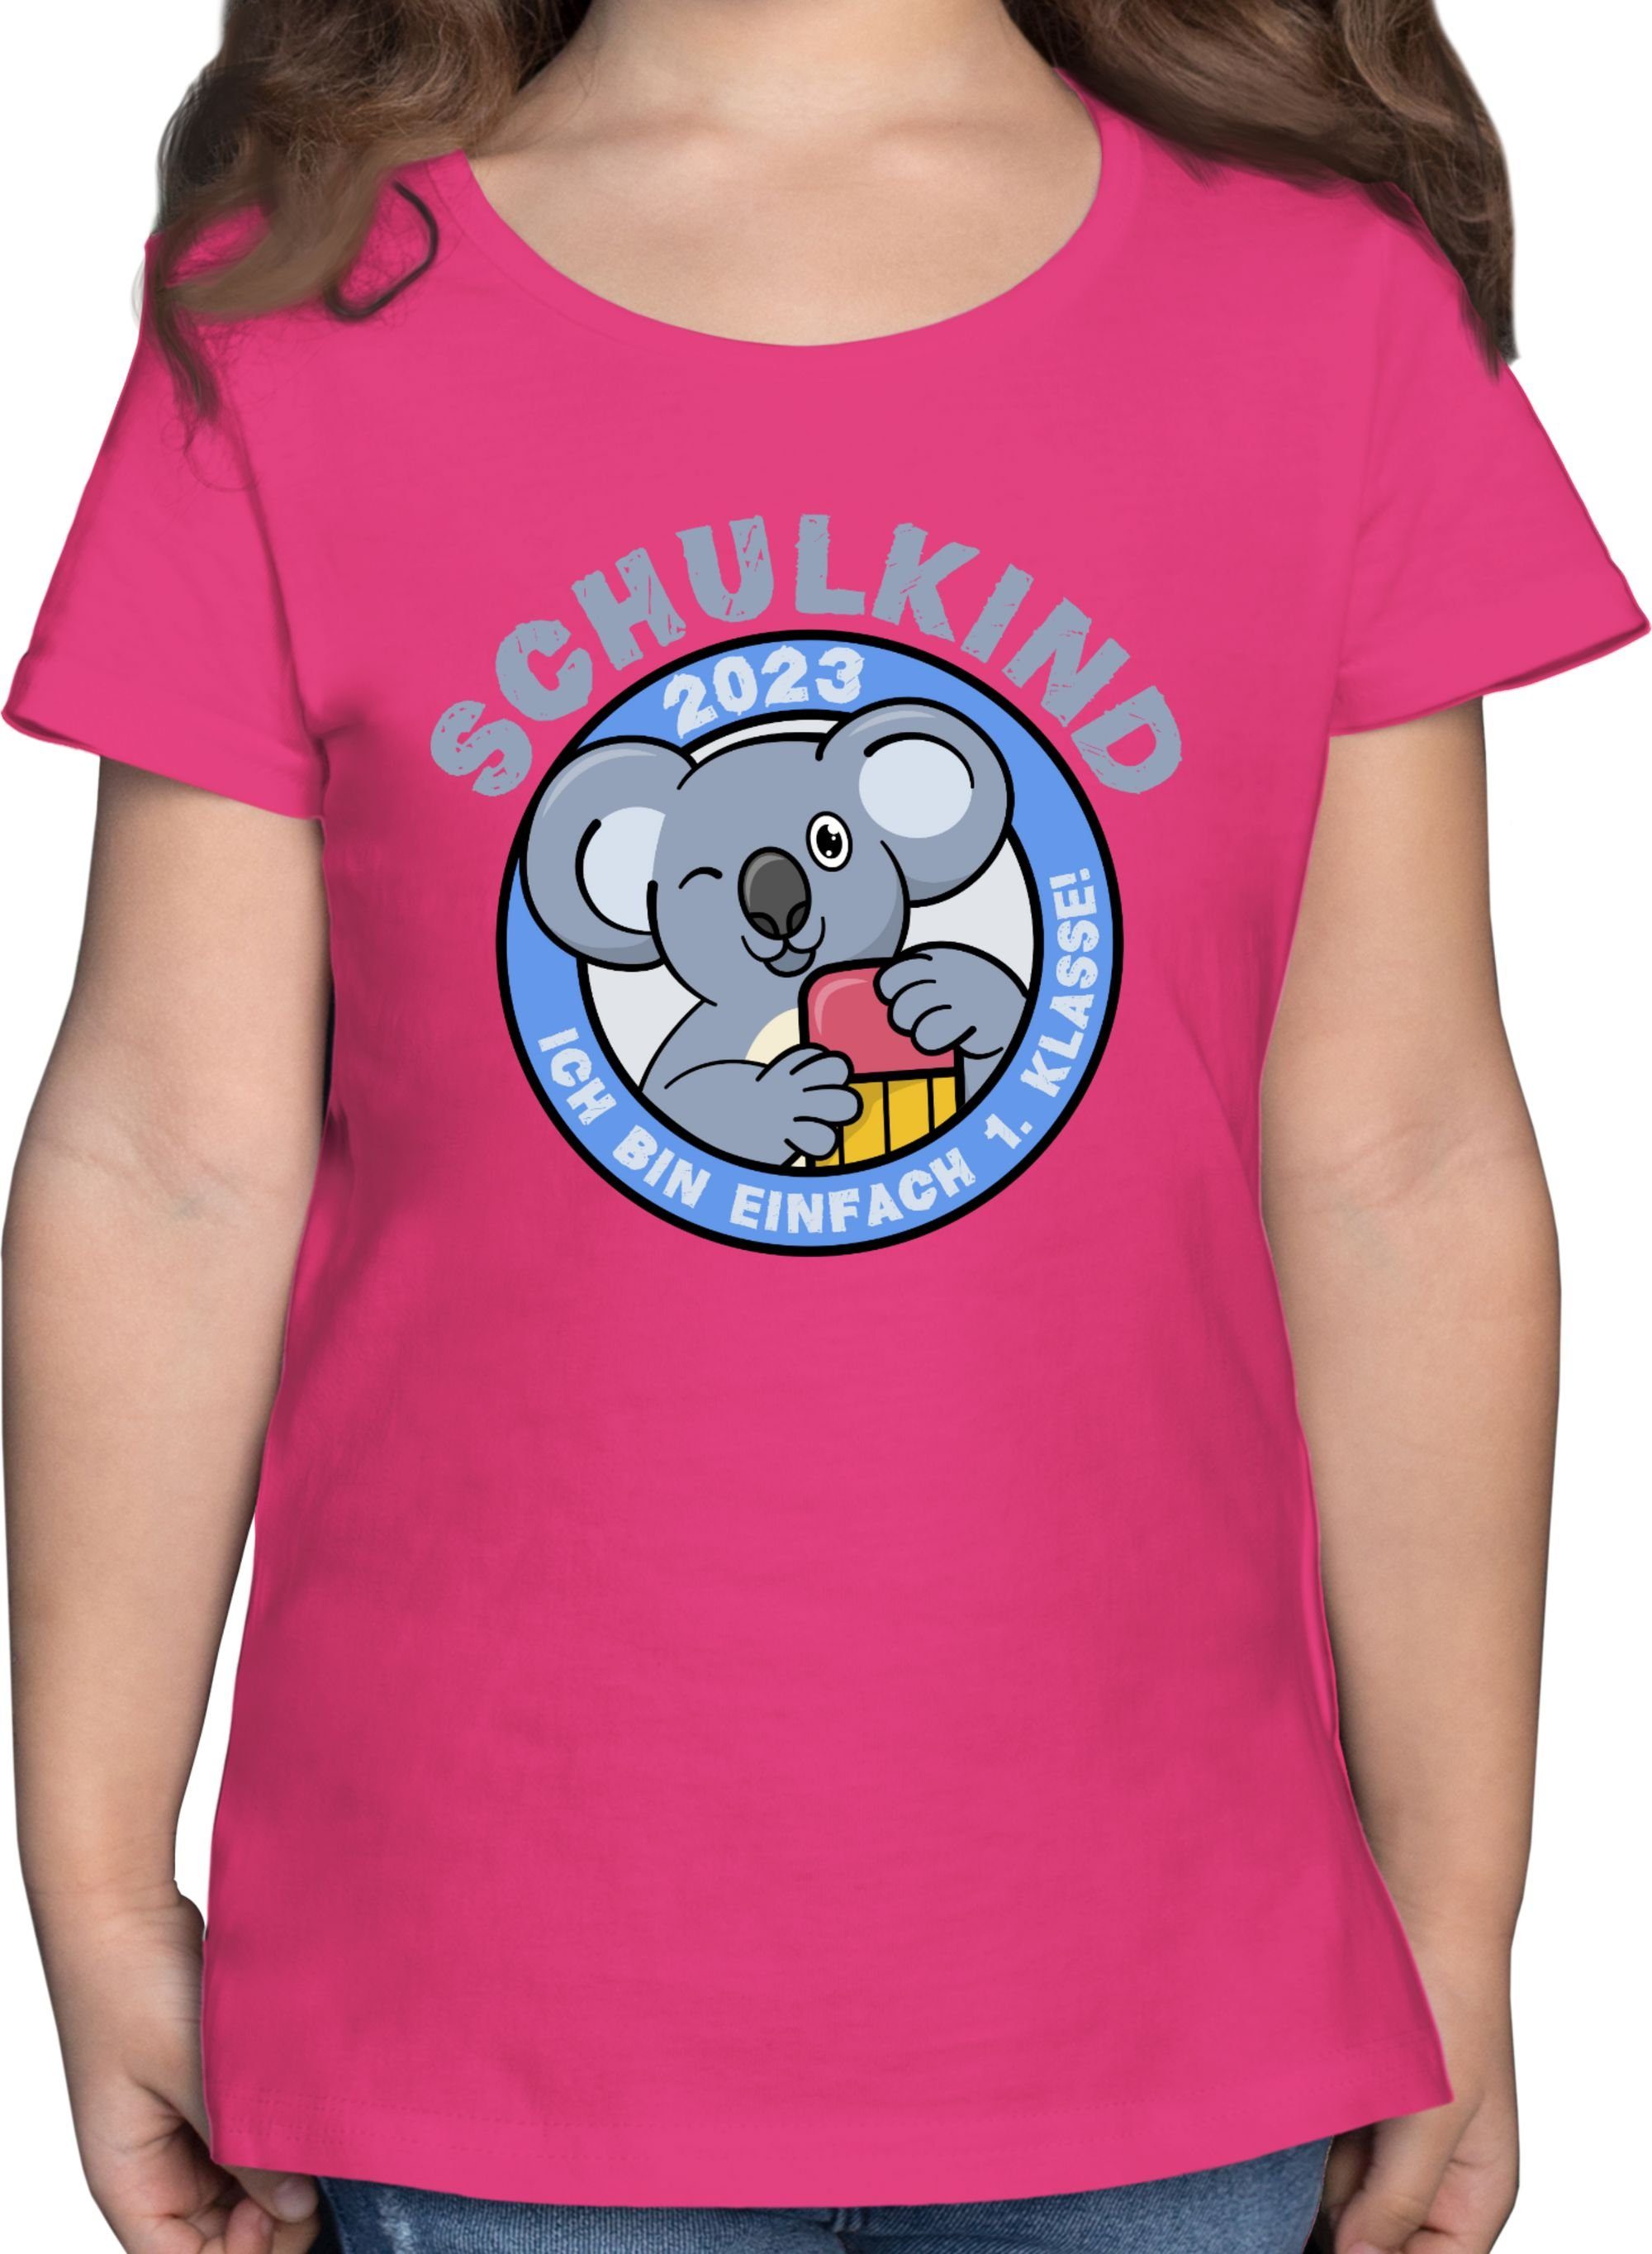 Shirtracer T-Shirt Schulkind 2023 Ich bin einfach 1. Klasse Koala Einschulung Mädchen 1 Fuchsia